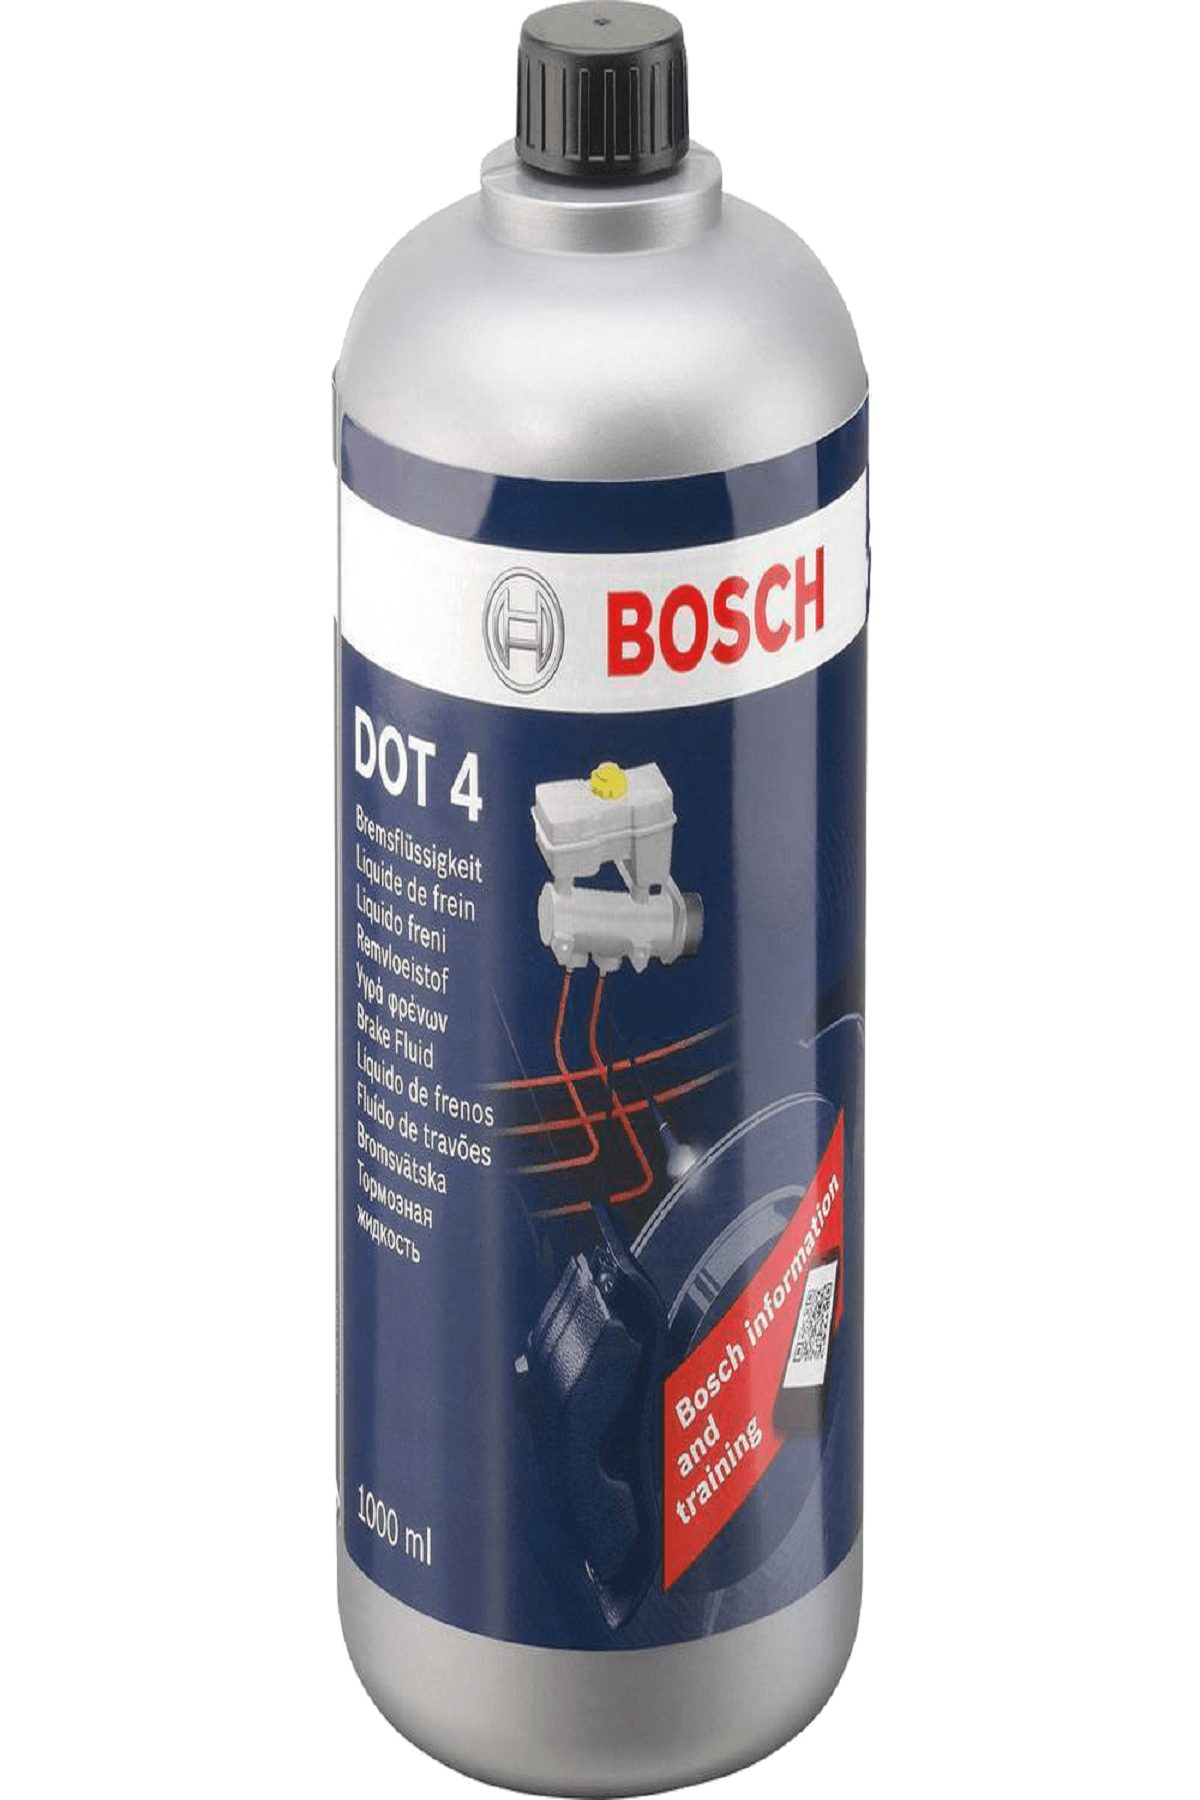 Bosch MOTOSİKLET & OTOMOBİL FREN HİDROLİK YAĞI DOT 4 BOSCH 1 LT